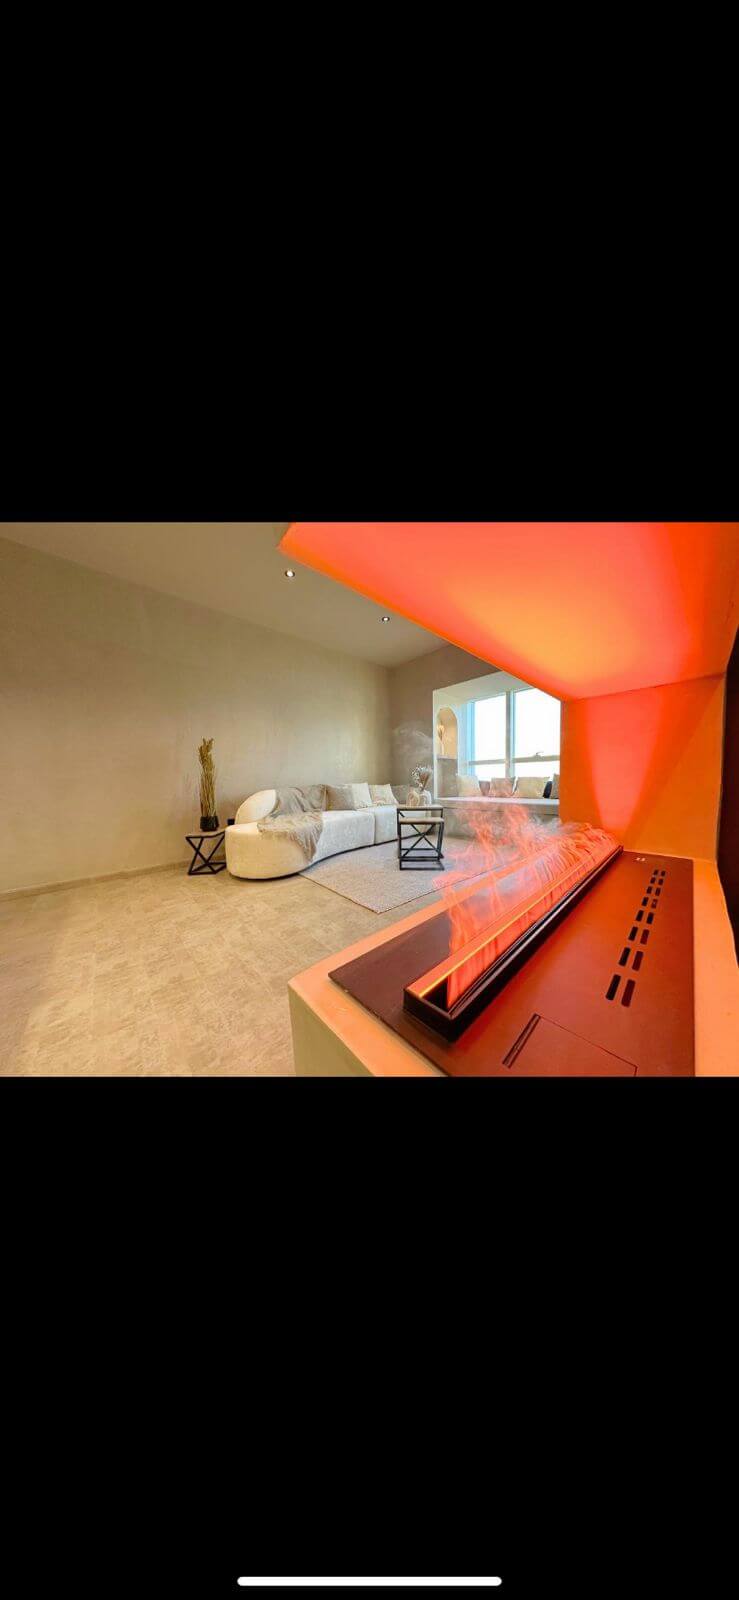 For sale a luxurious furnished apartment in Dubai | للبيع شقة مفروشة فخمة في دبي